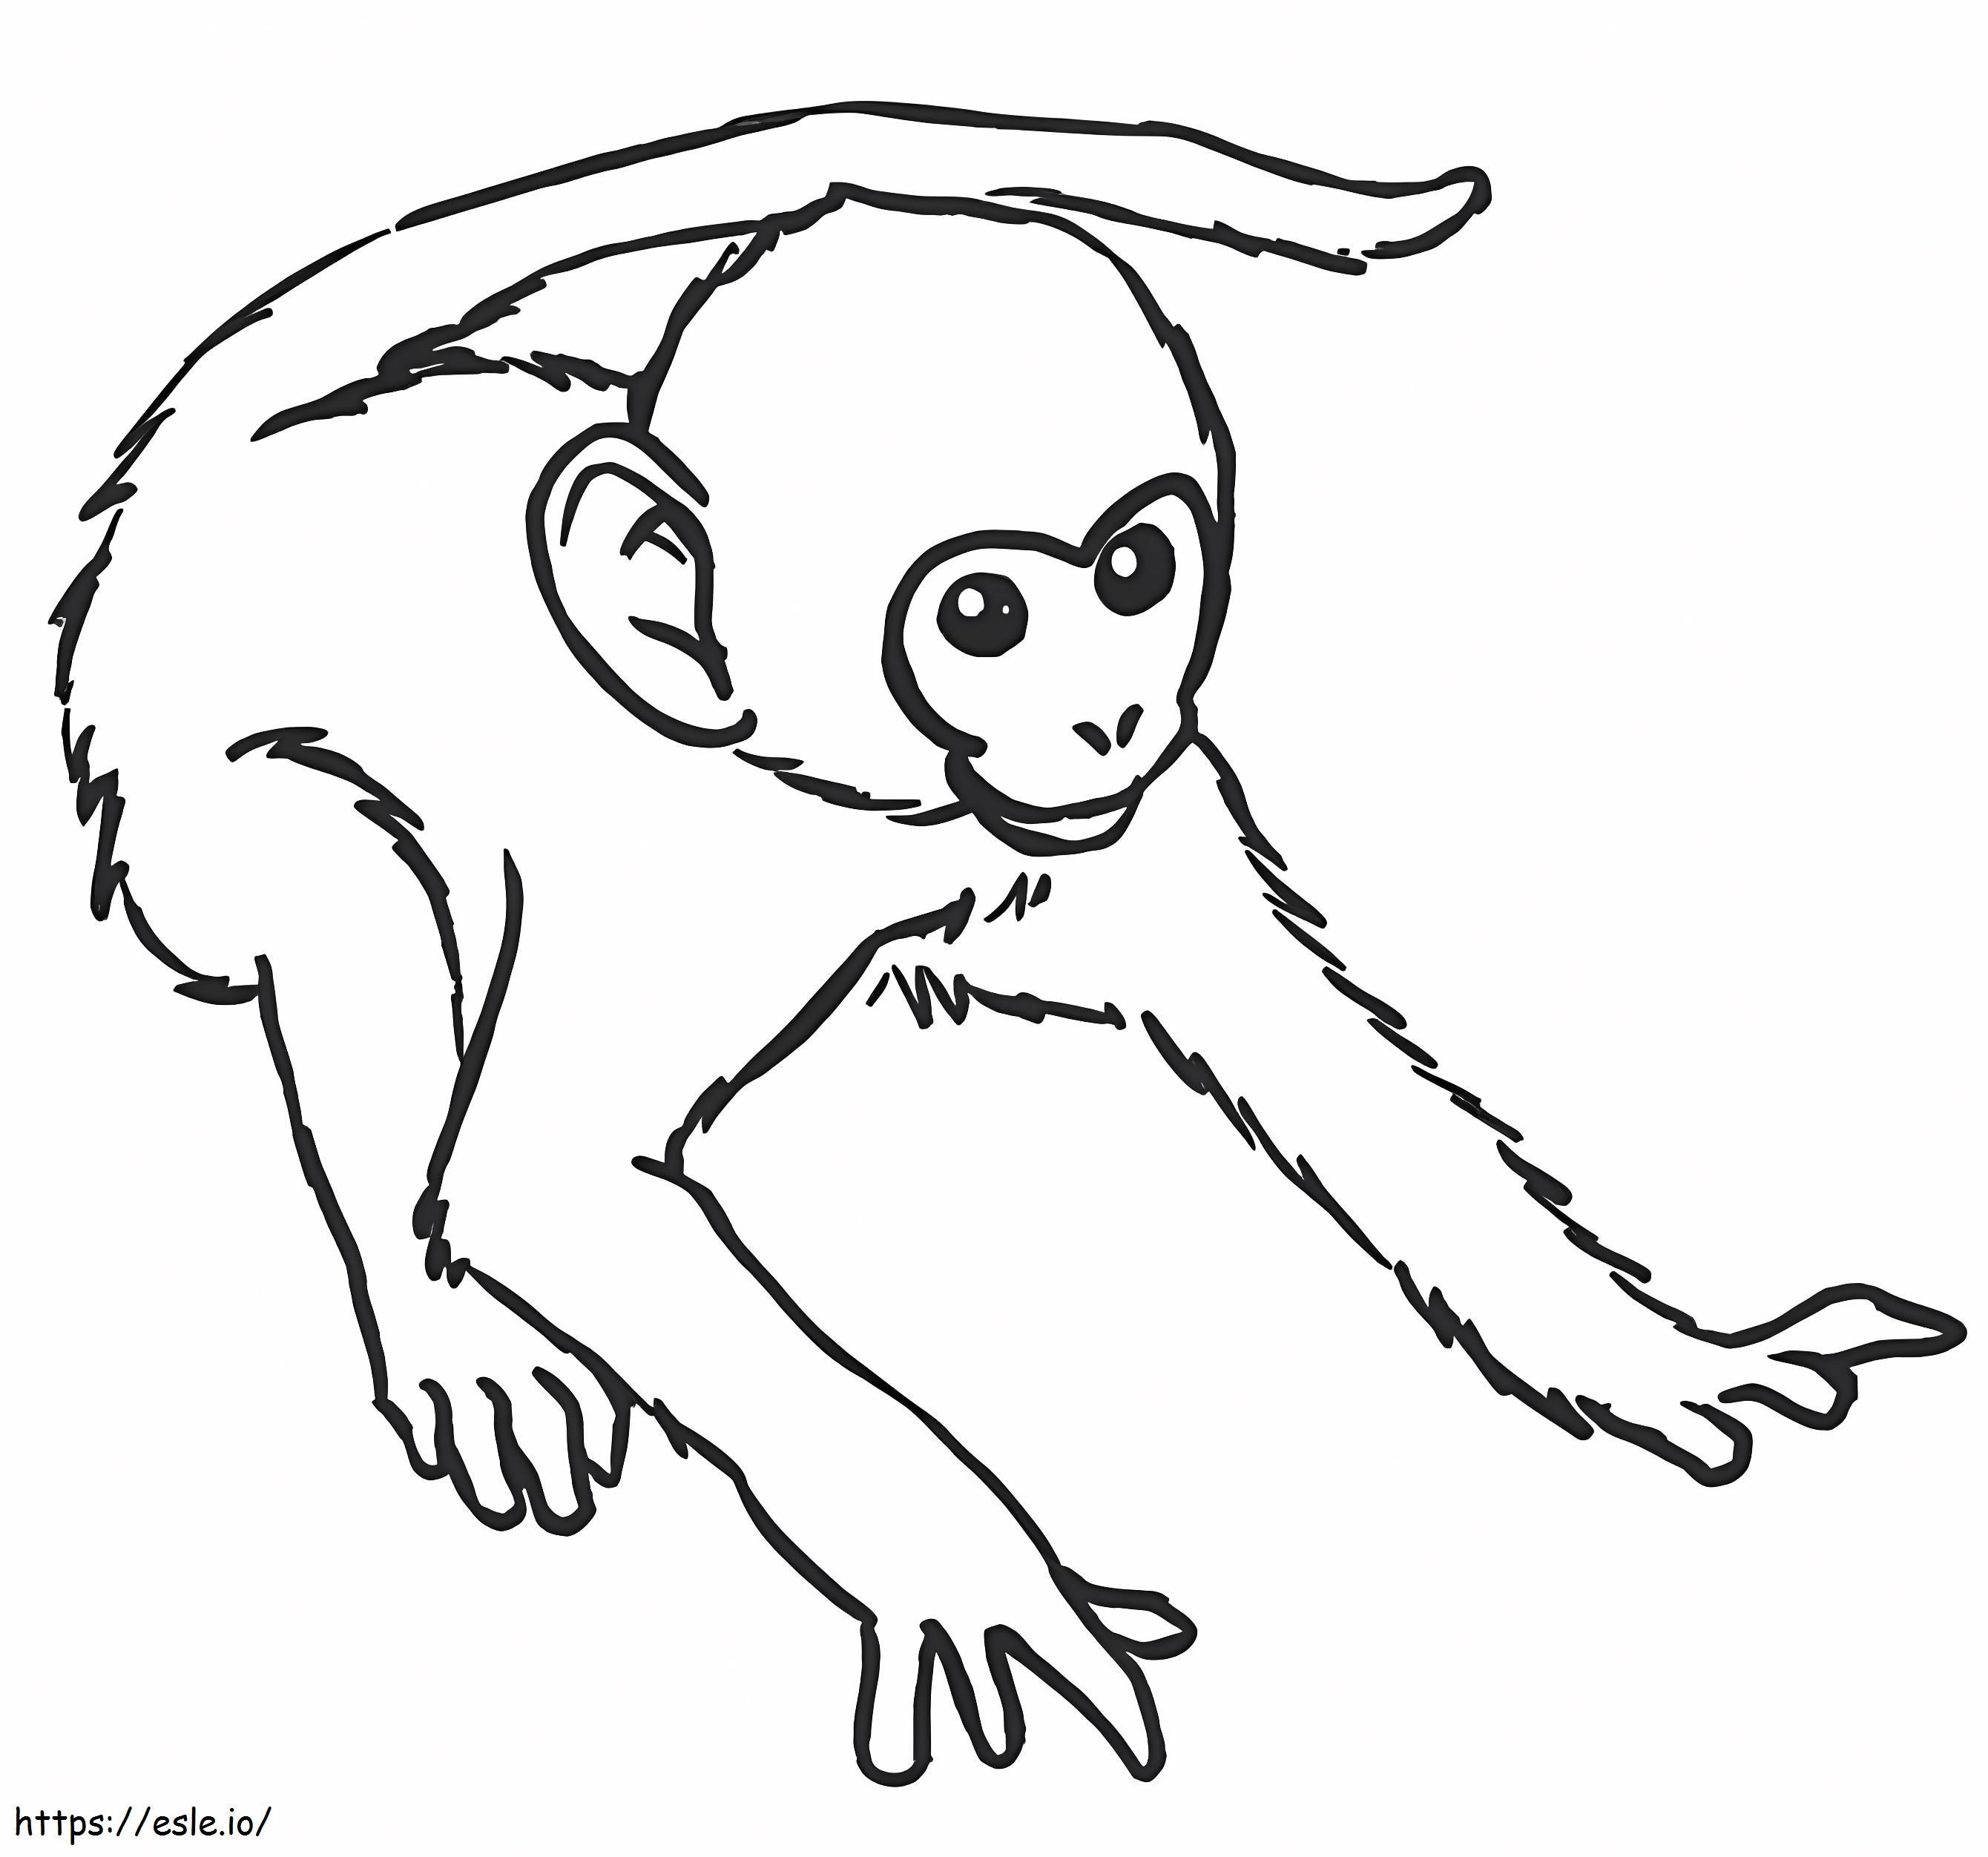 Maymun Çizimi boyama